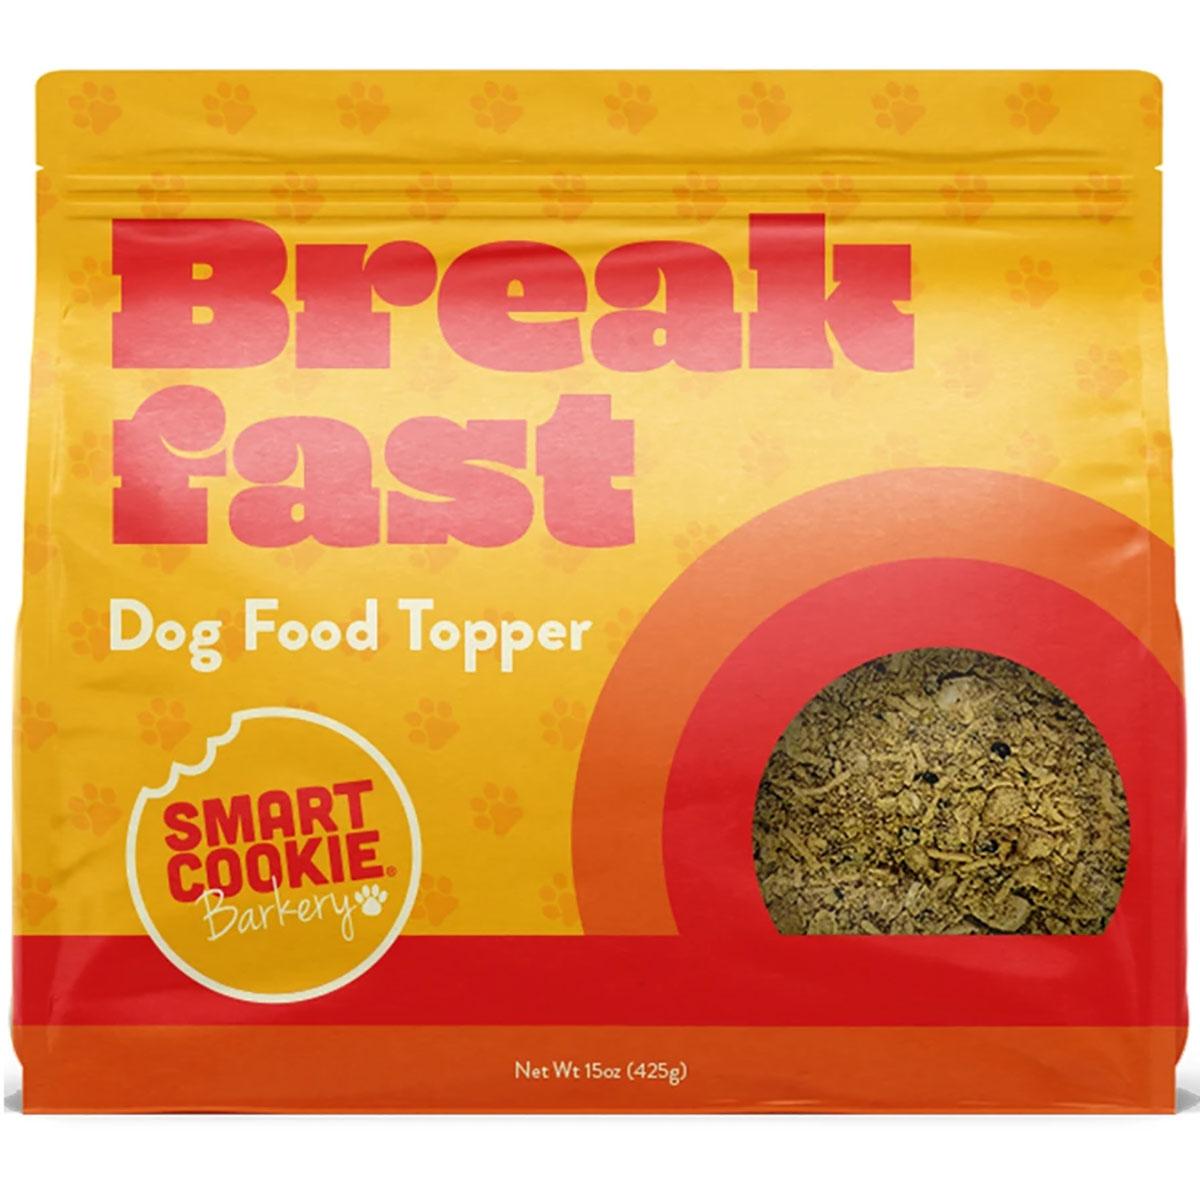 Smart Cookie Barkery Breakfast Dog Food Topper